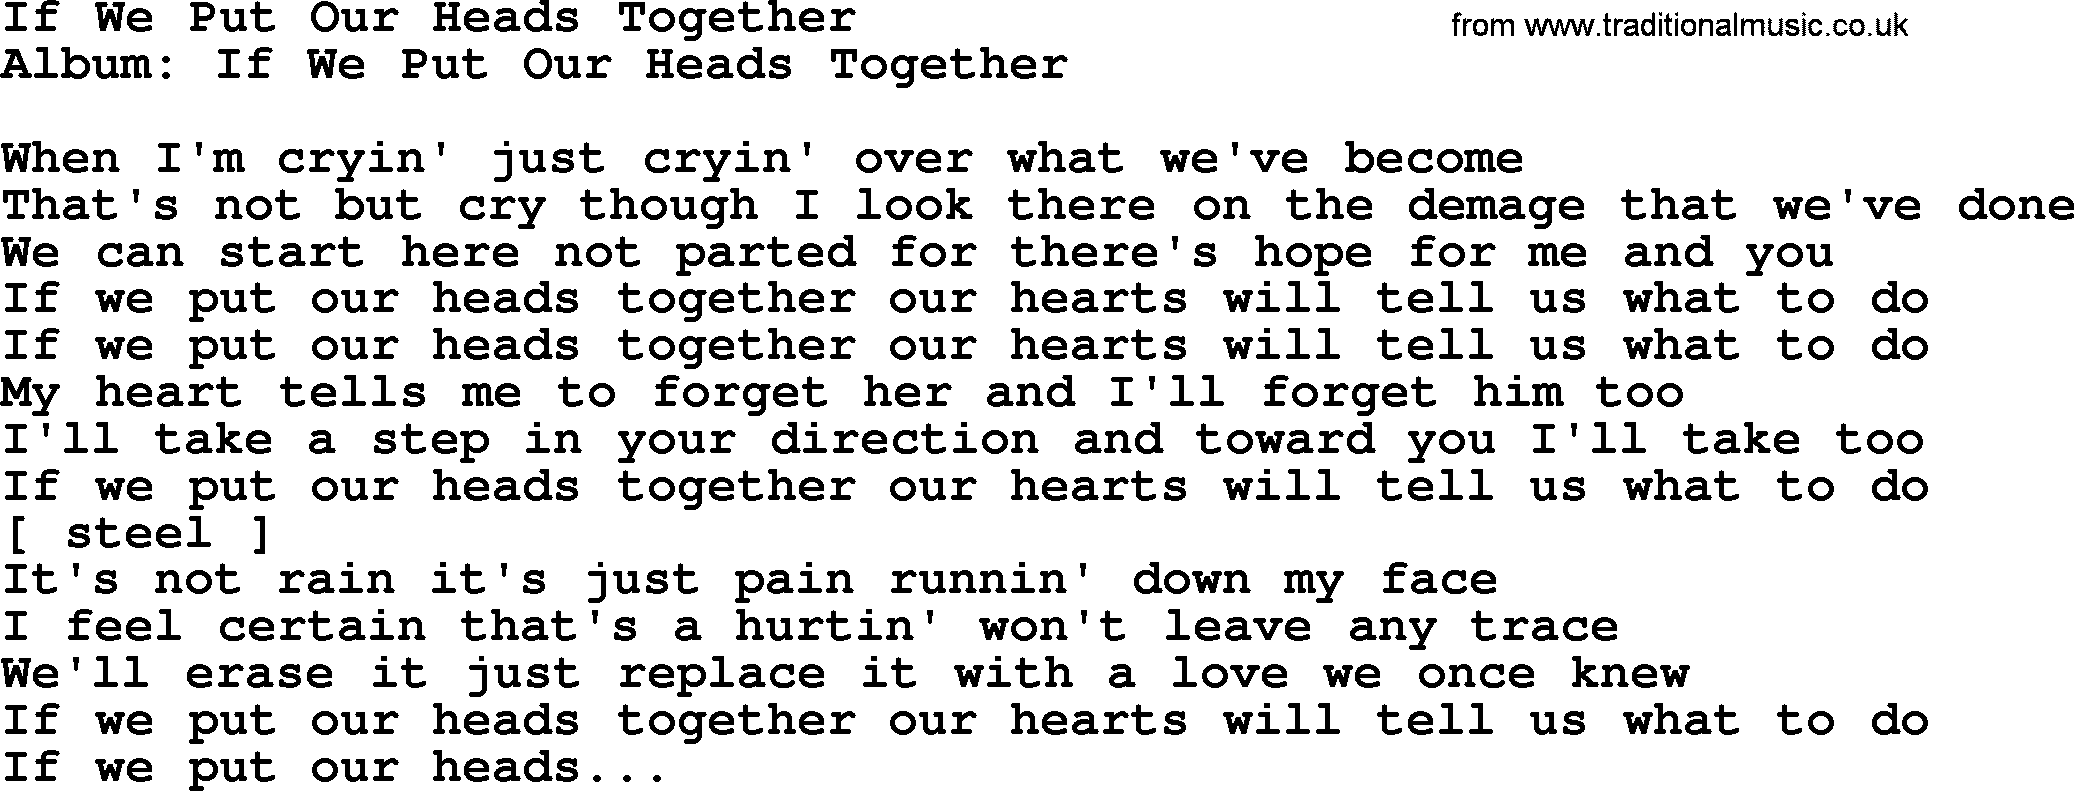 Loretta Lynn song: If We Put Our Heads Together lyrics